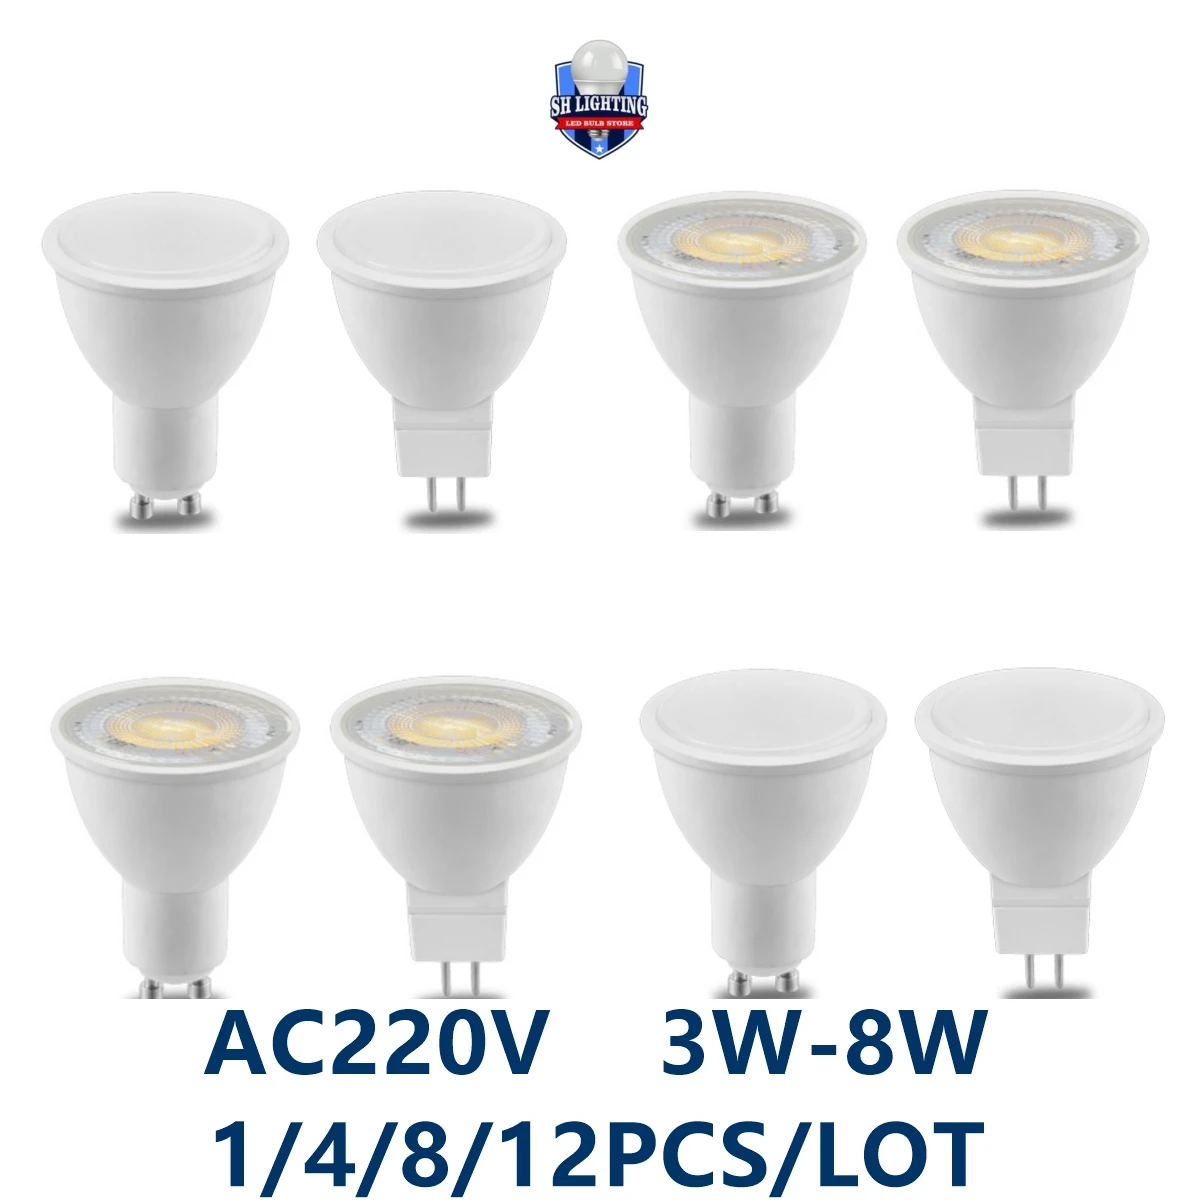 

1-12pc LED spotlight GU10 MR16 GU5.3 AC220V 3W-8W warm white light replacement 50W 100W halogen lamp suitable for kitchen